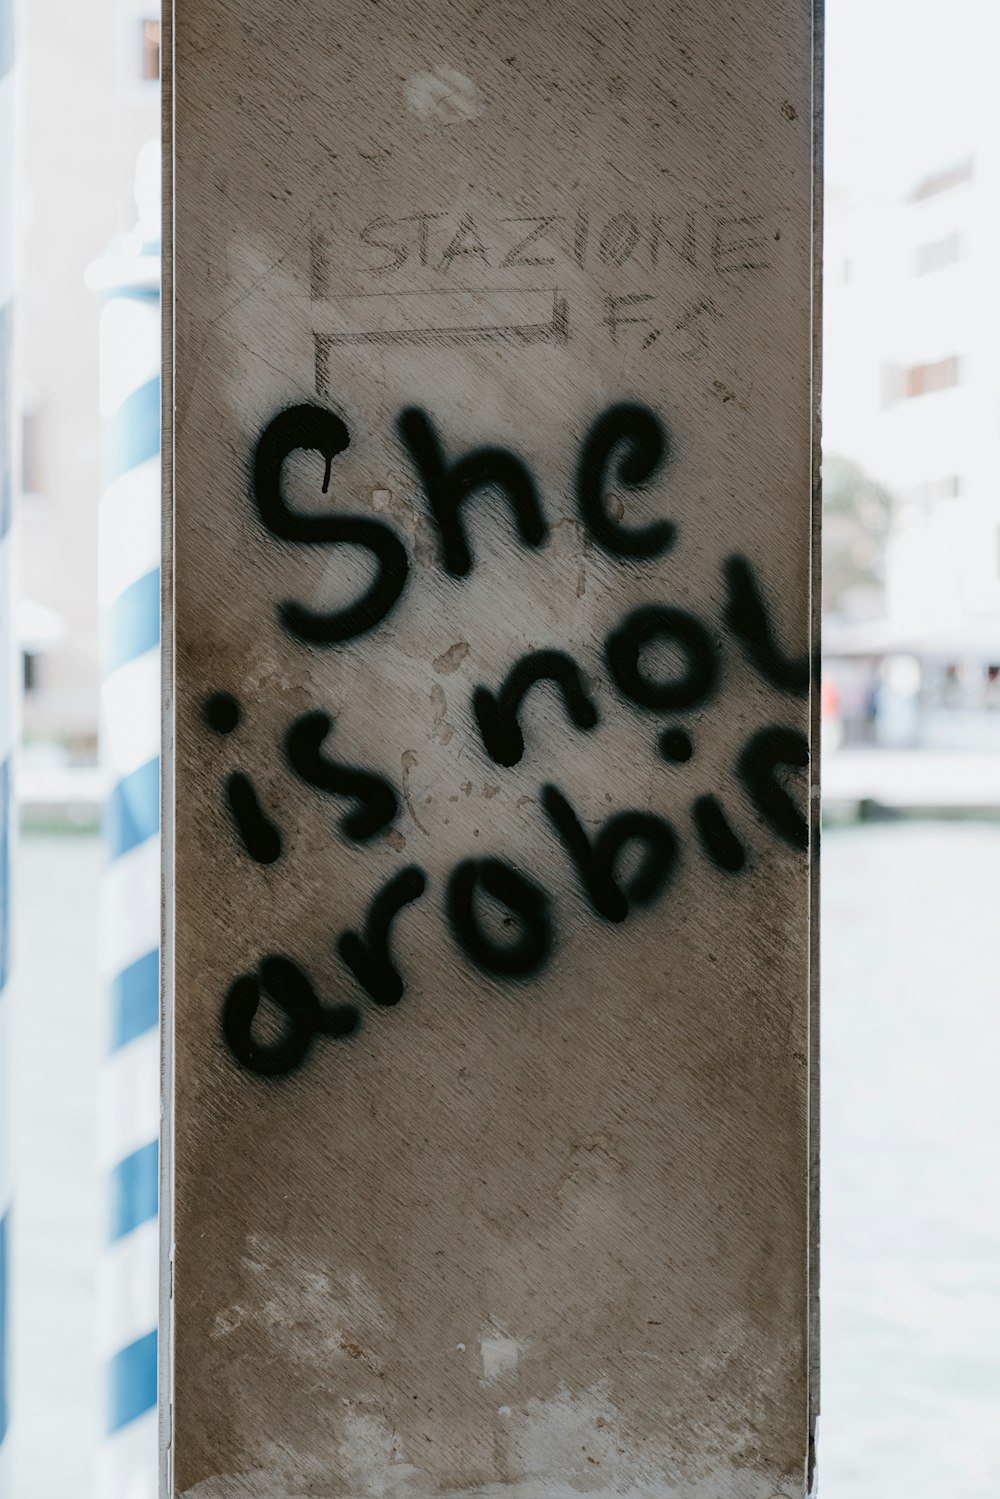 She is not arobin graffiti on wall